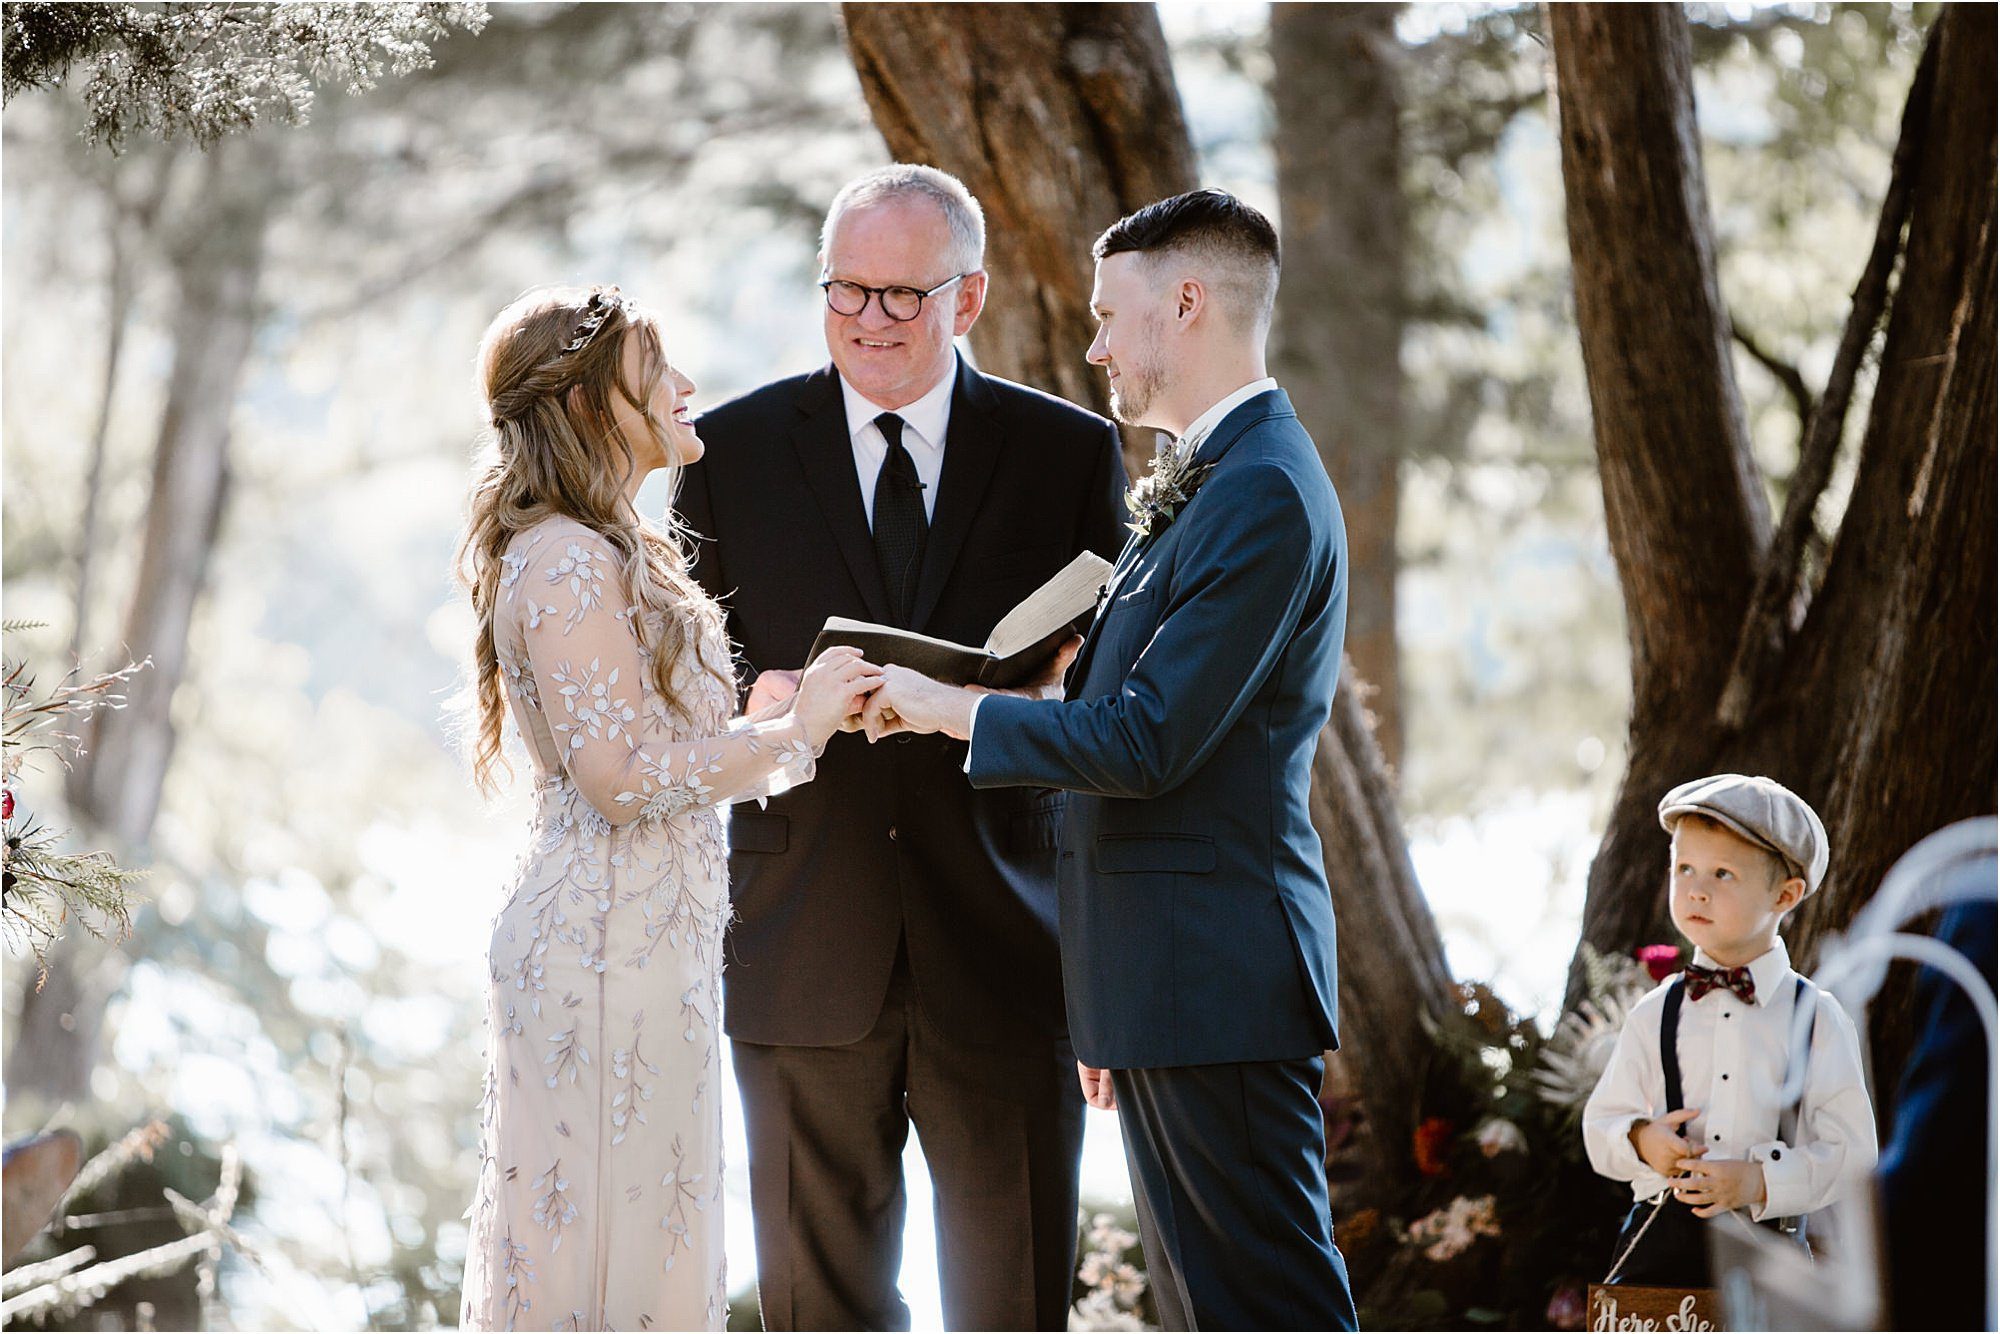 bride and groom exchange rings at jewel-toned wedding